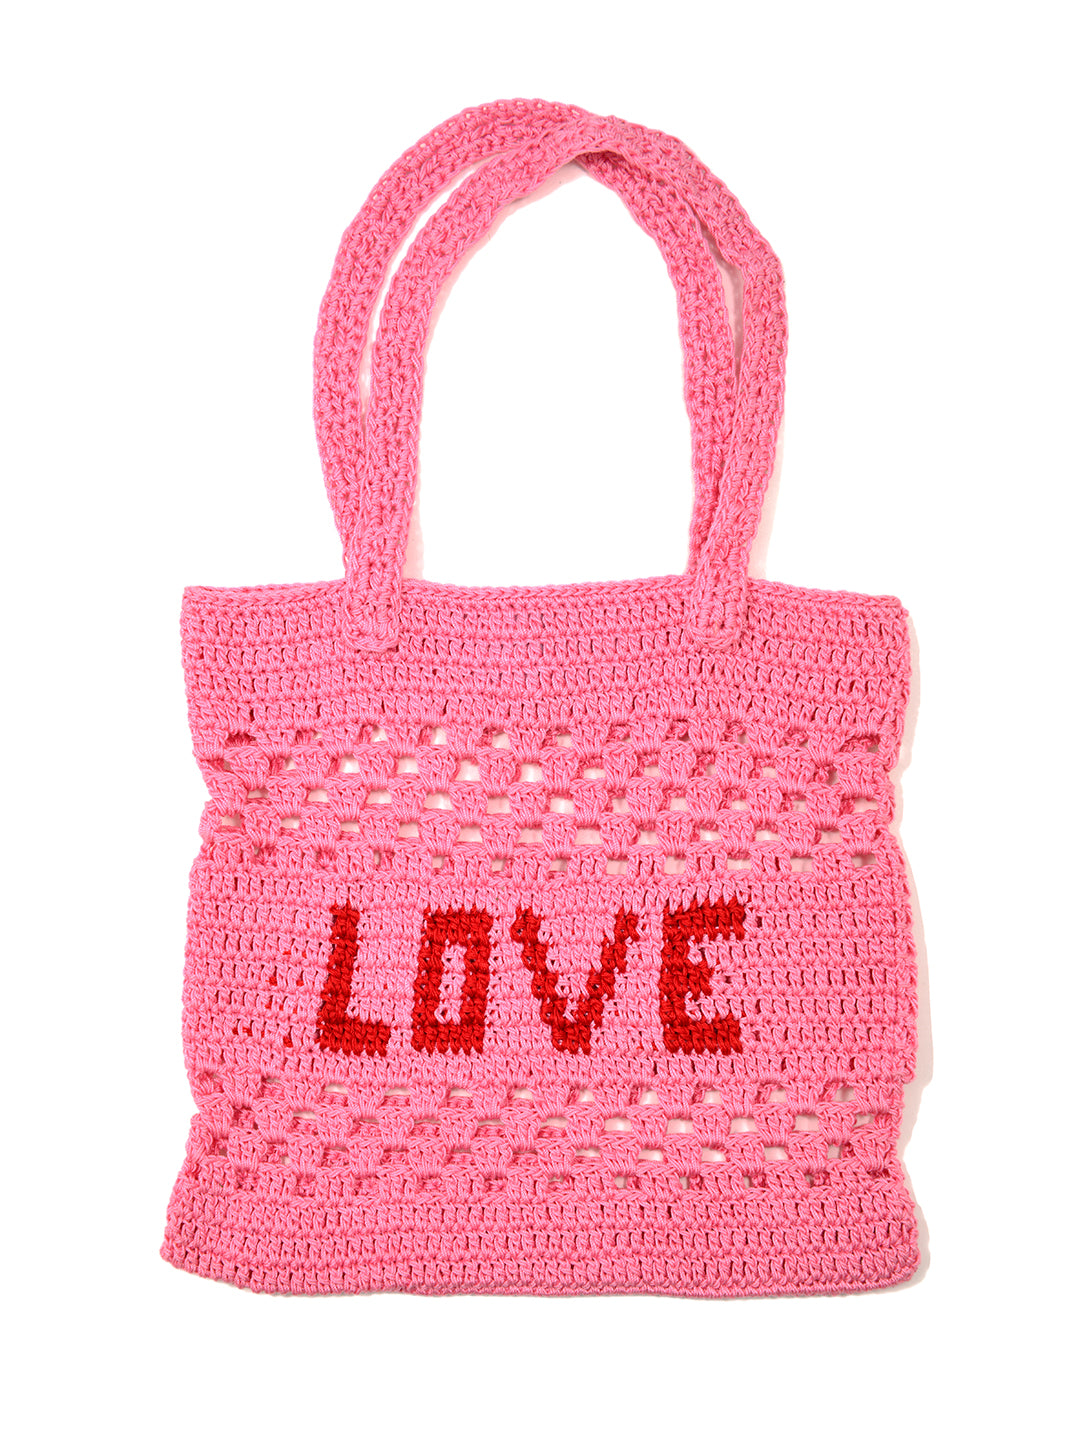 Crochet Heart Tote Bag Tutorial 